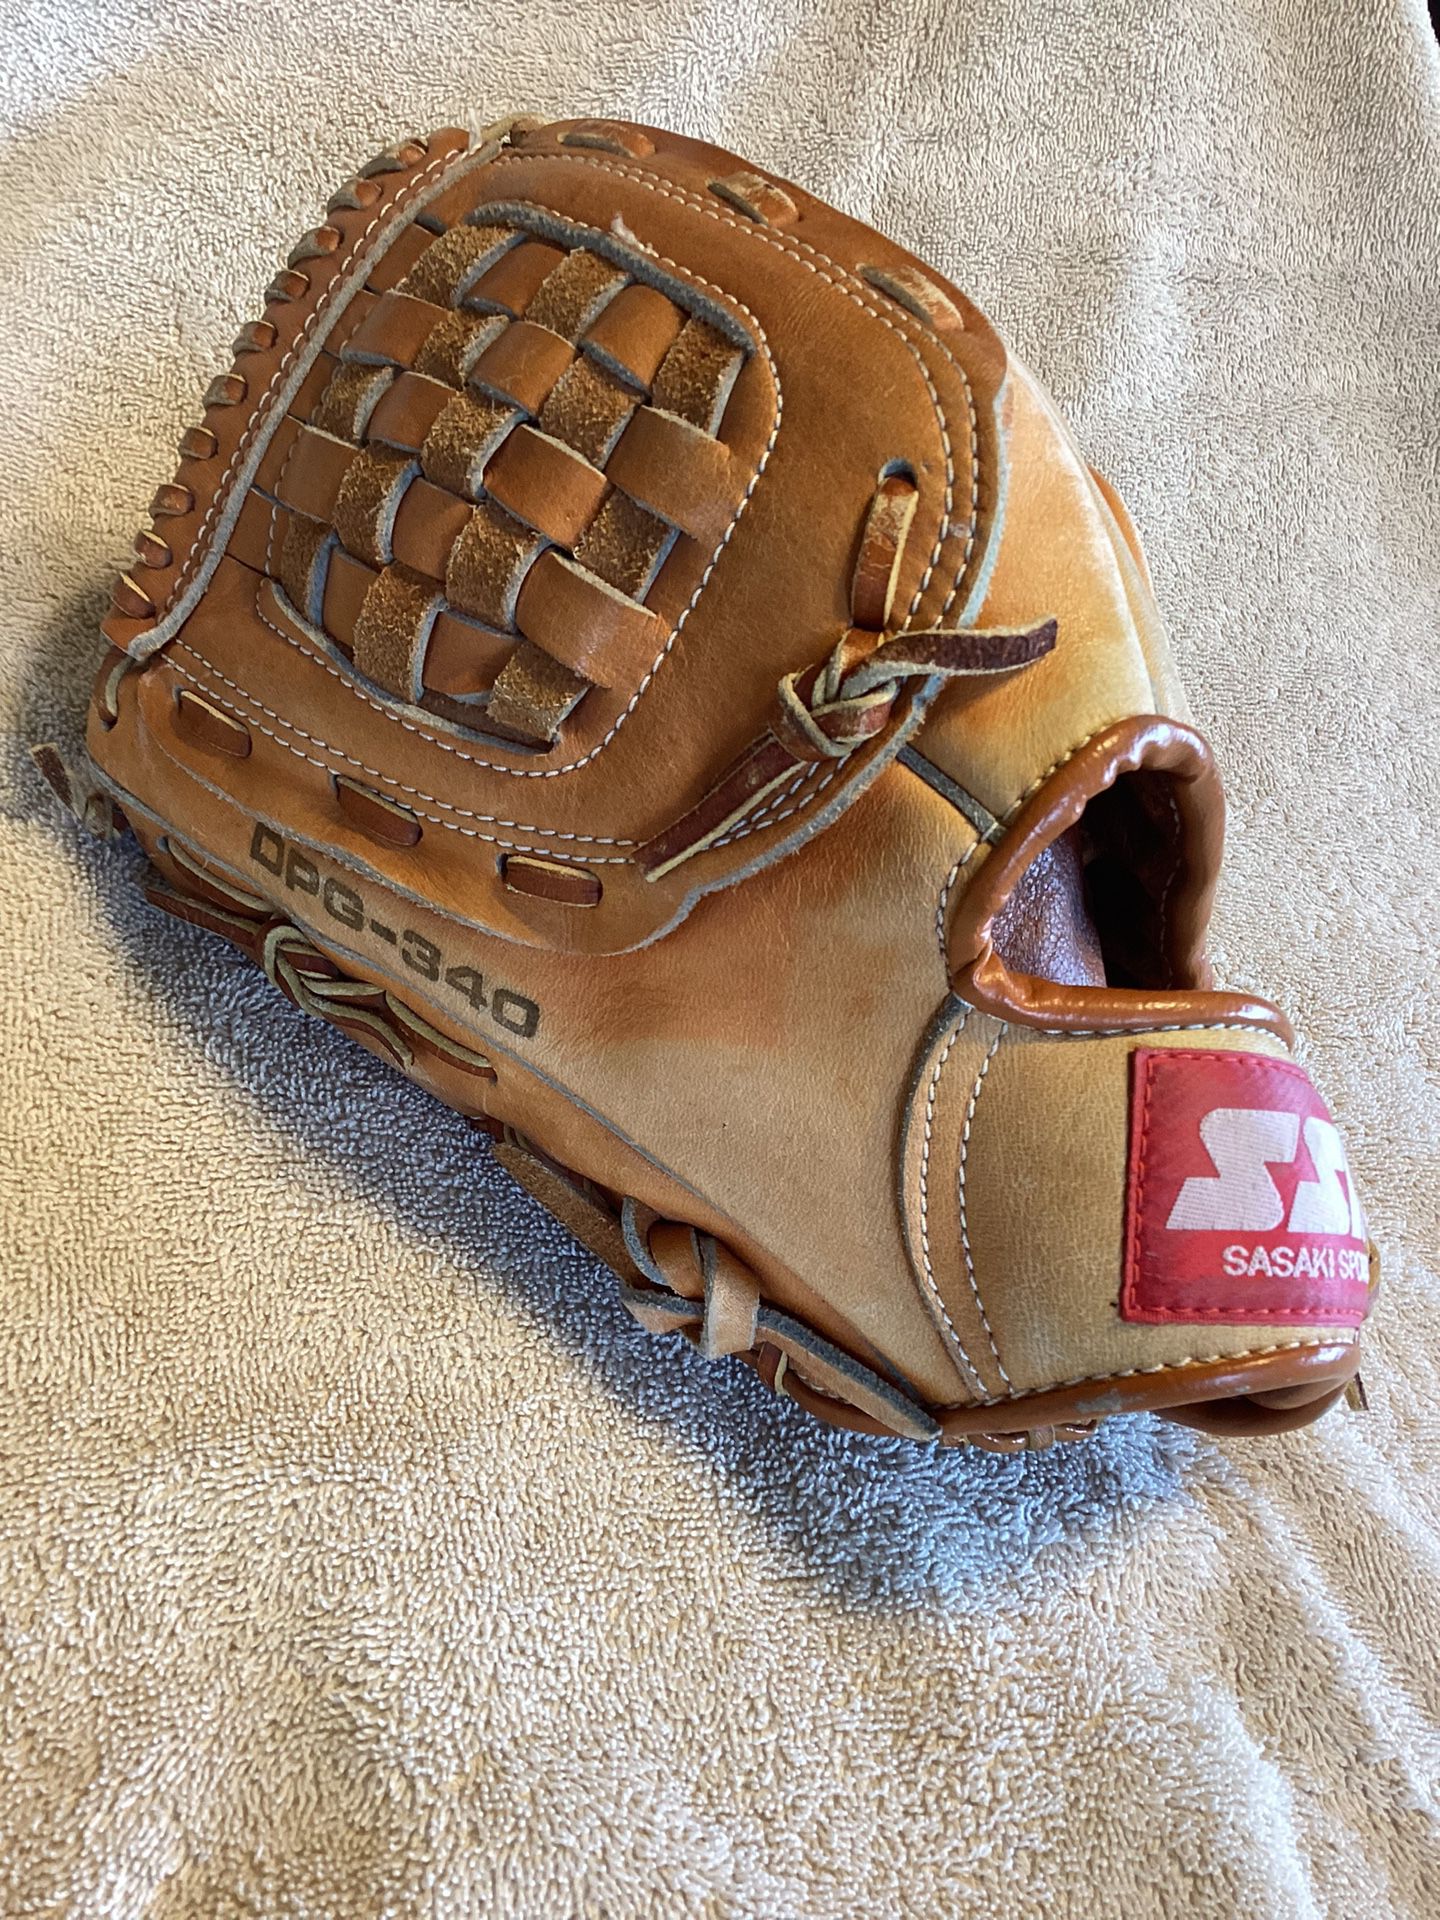 SSK 11” Left Hand Throw Baseball Glove